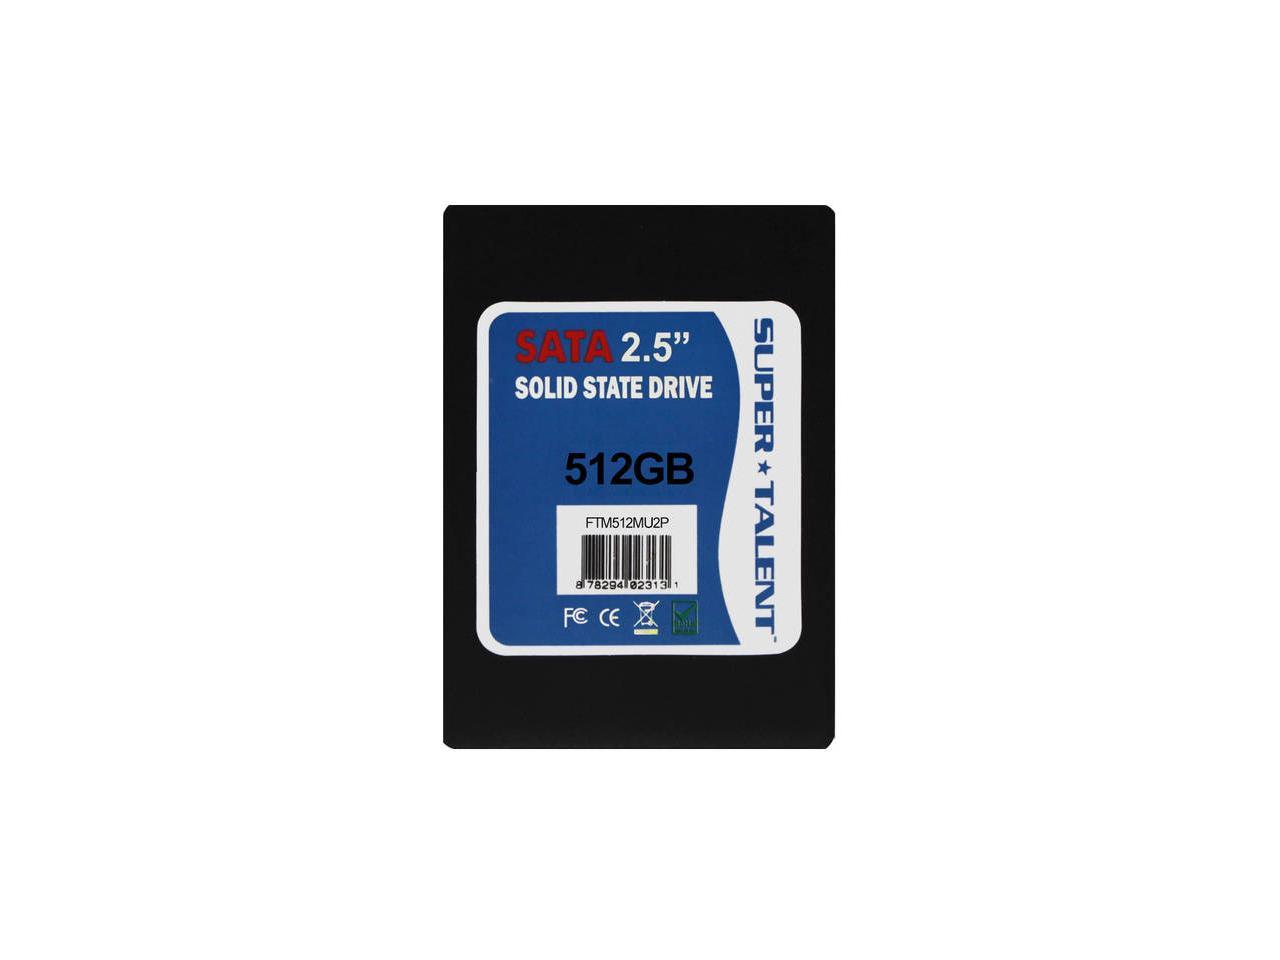 Super Talent DuraDrive AT7 512GB 2.5 inch SATA3 Solid State Drive (MLC)